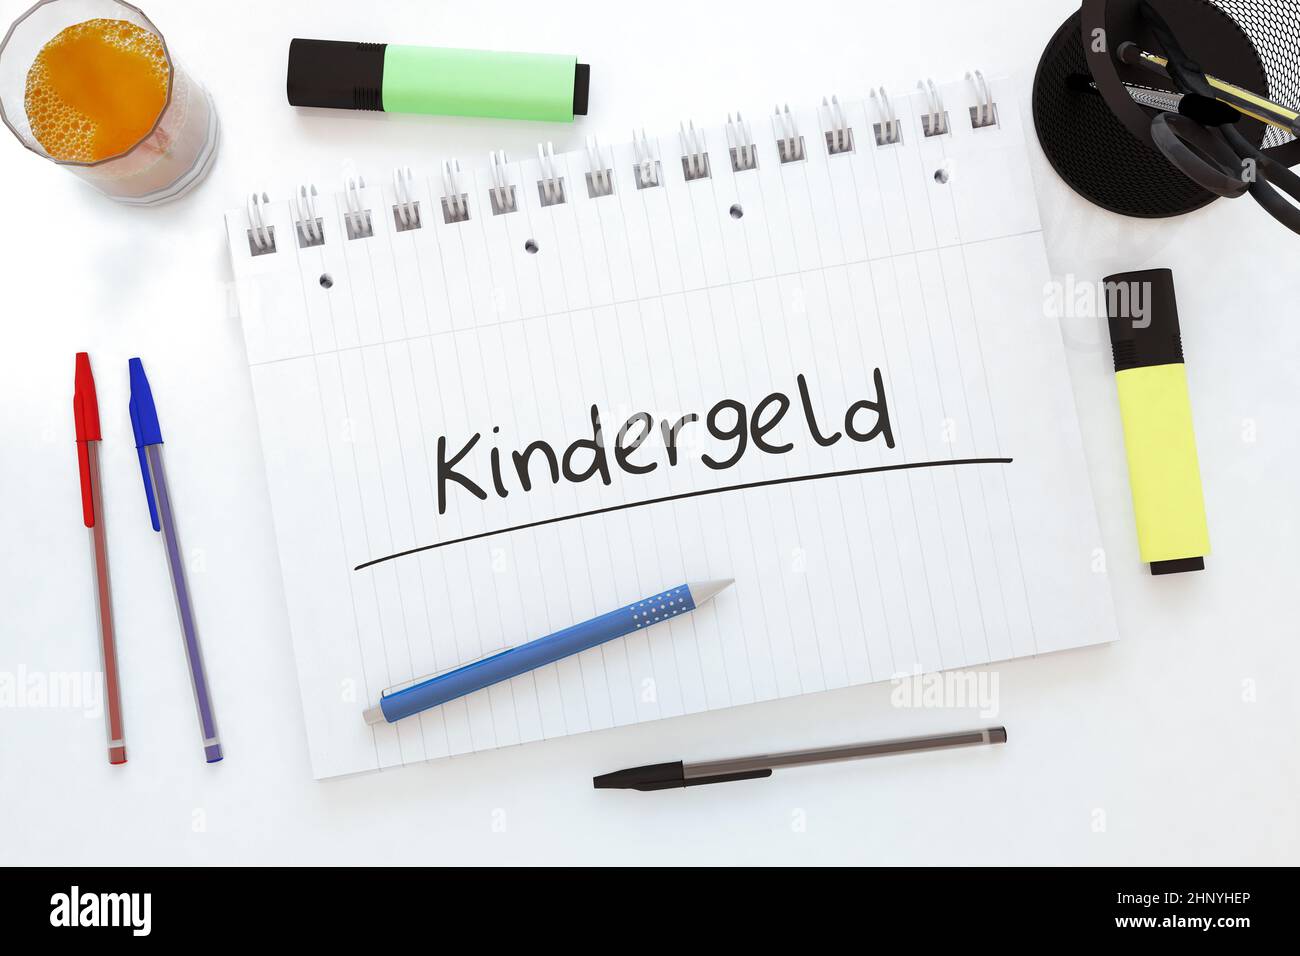 Kindergeld - german word for child benefit or allowance - handwritten text in a notebook on a desk - 3d render illustration. Stock Photo